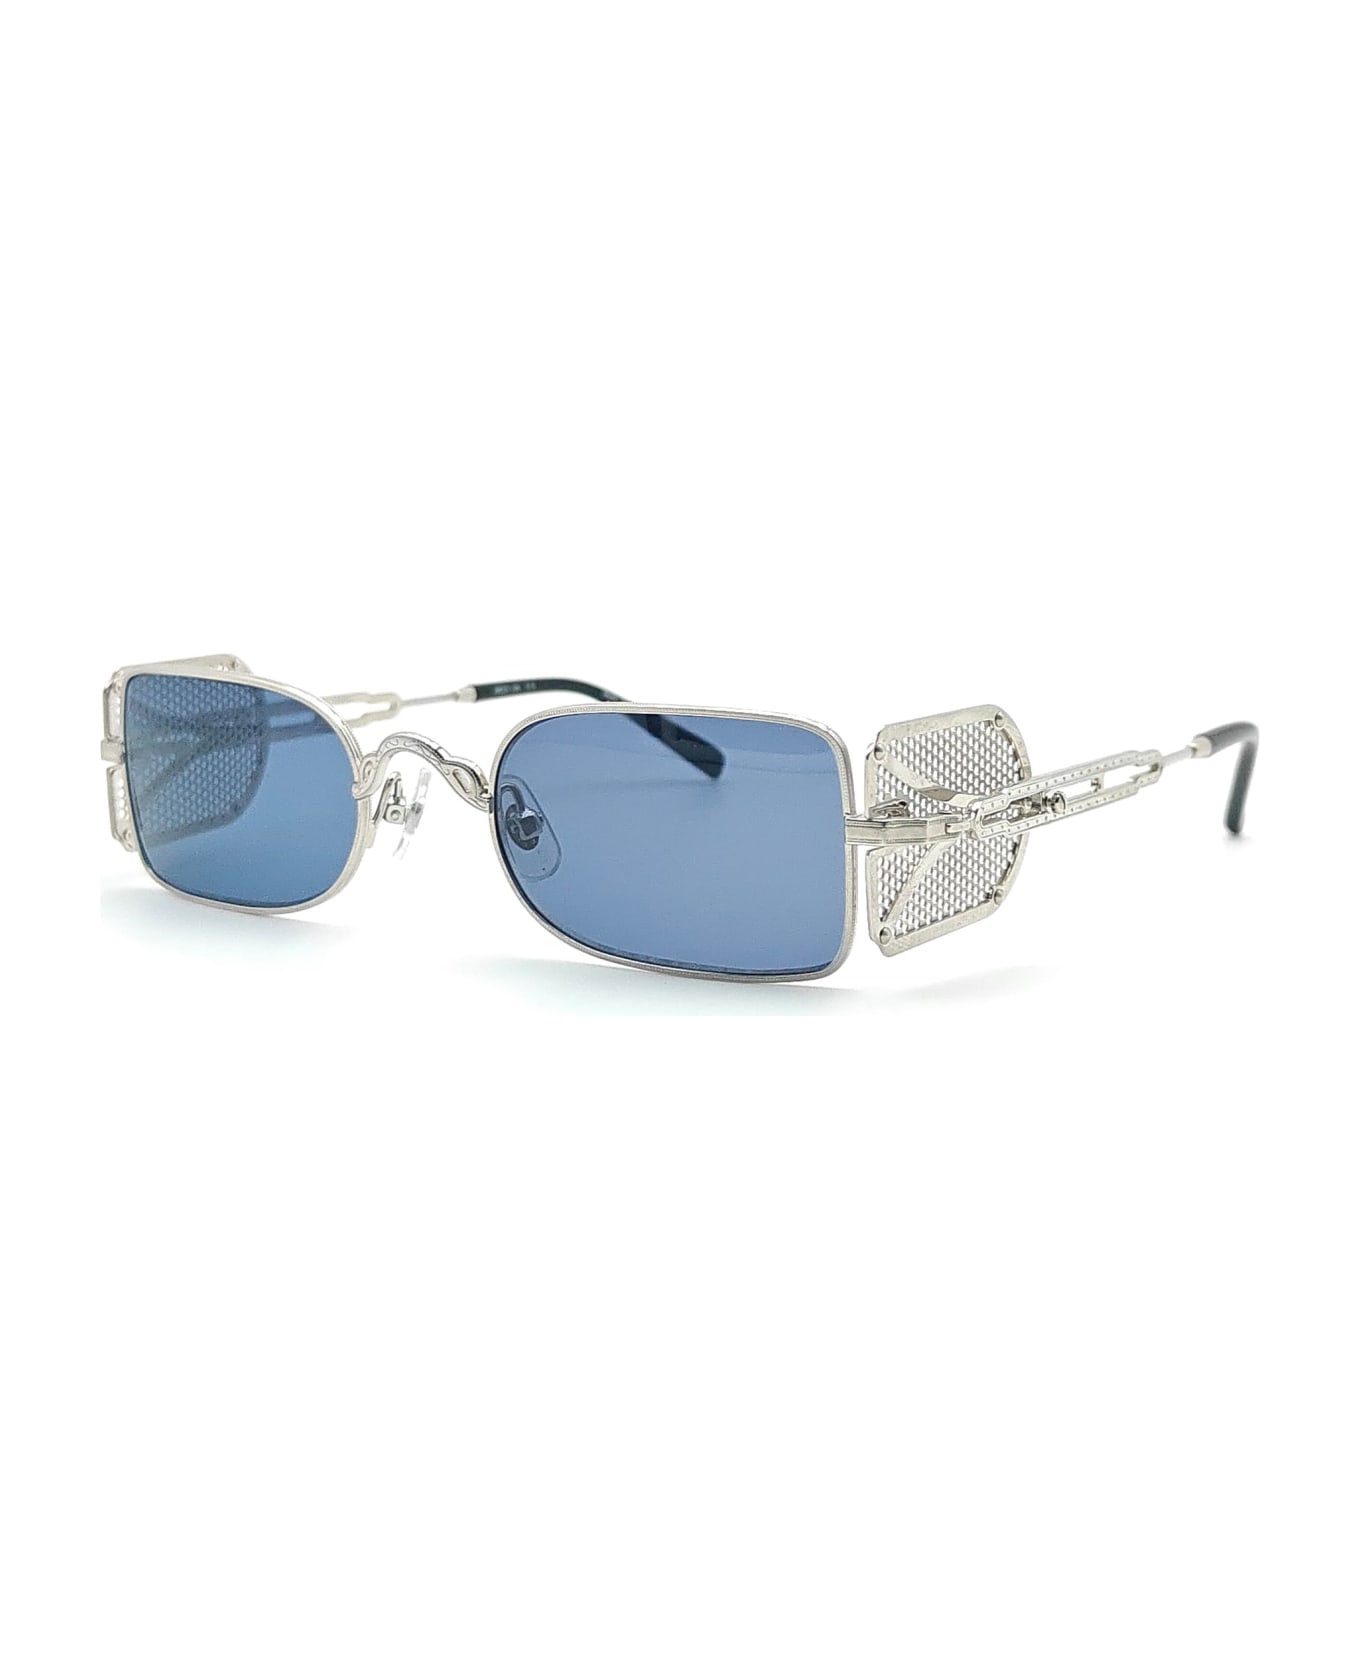 Matsuda 10611h - Palladium White / Brushed Silver Sunglasses - Silver